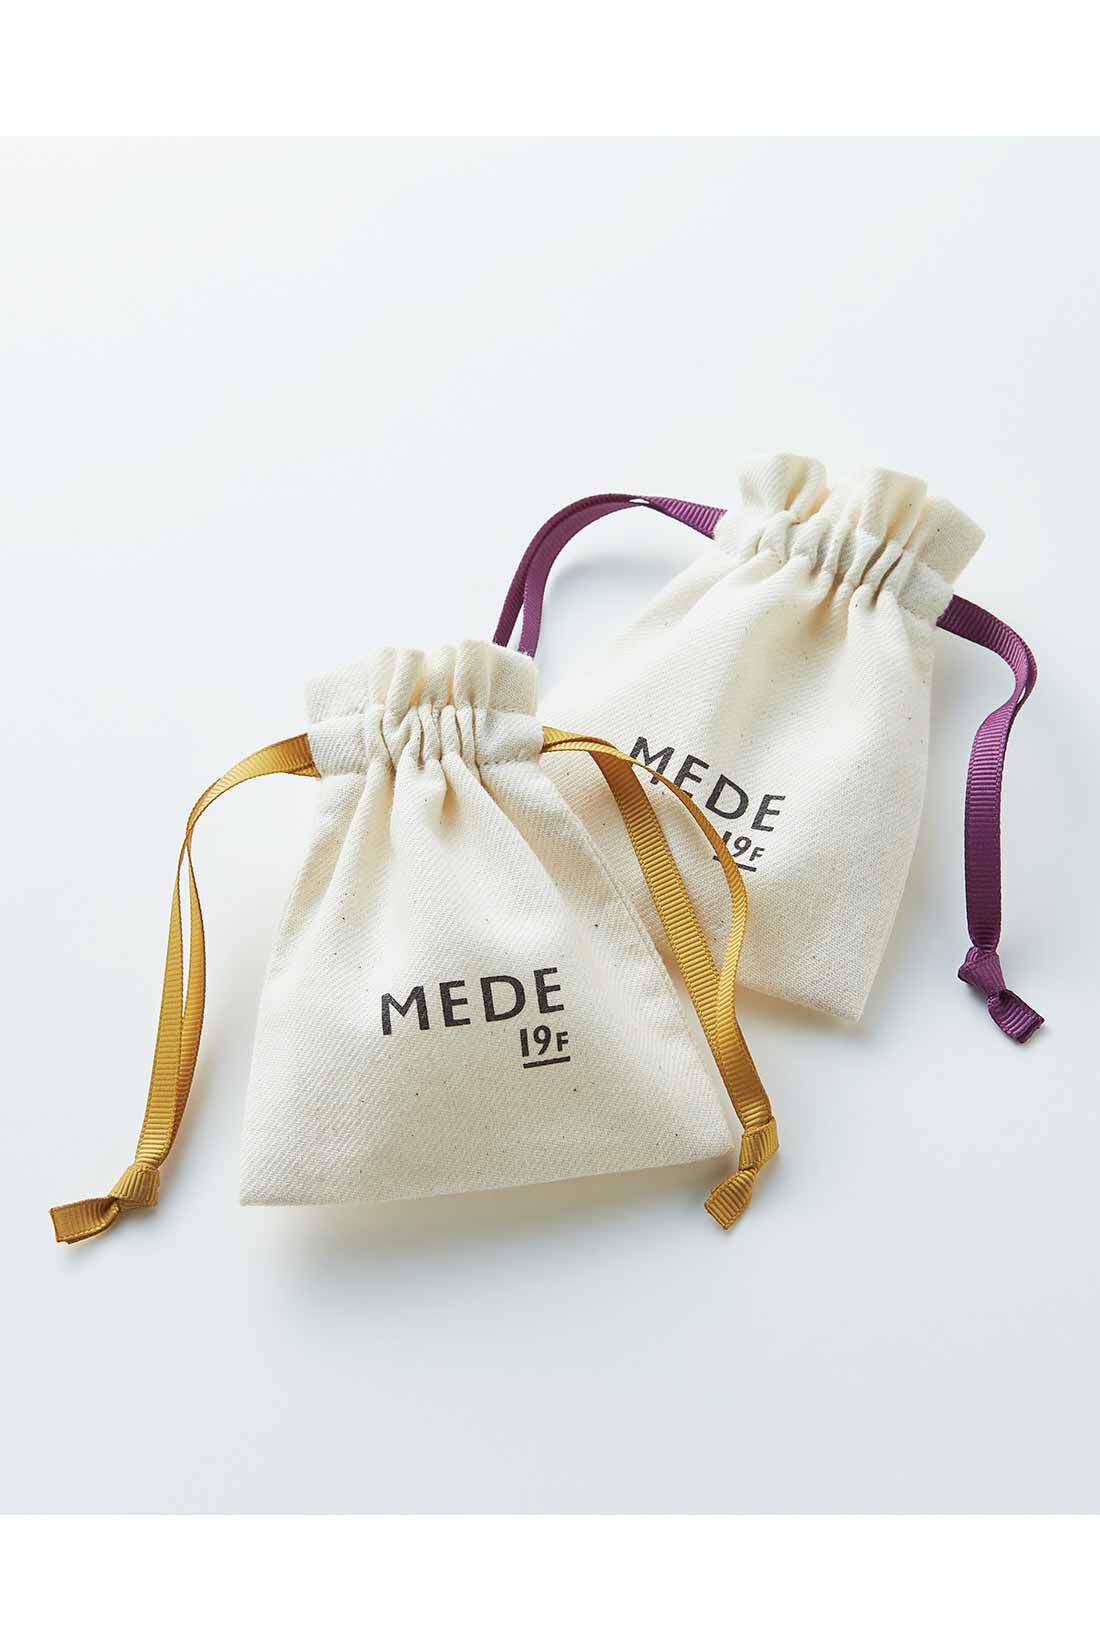 MEDE19F|YPAC for MEDE19F　フランス製陶器ボタンイヤリング type.18|MEDE19Fオリジナルきんちゃくに入れてお届けします。